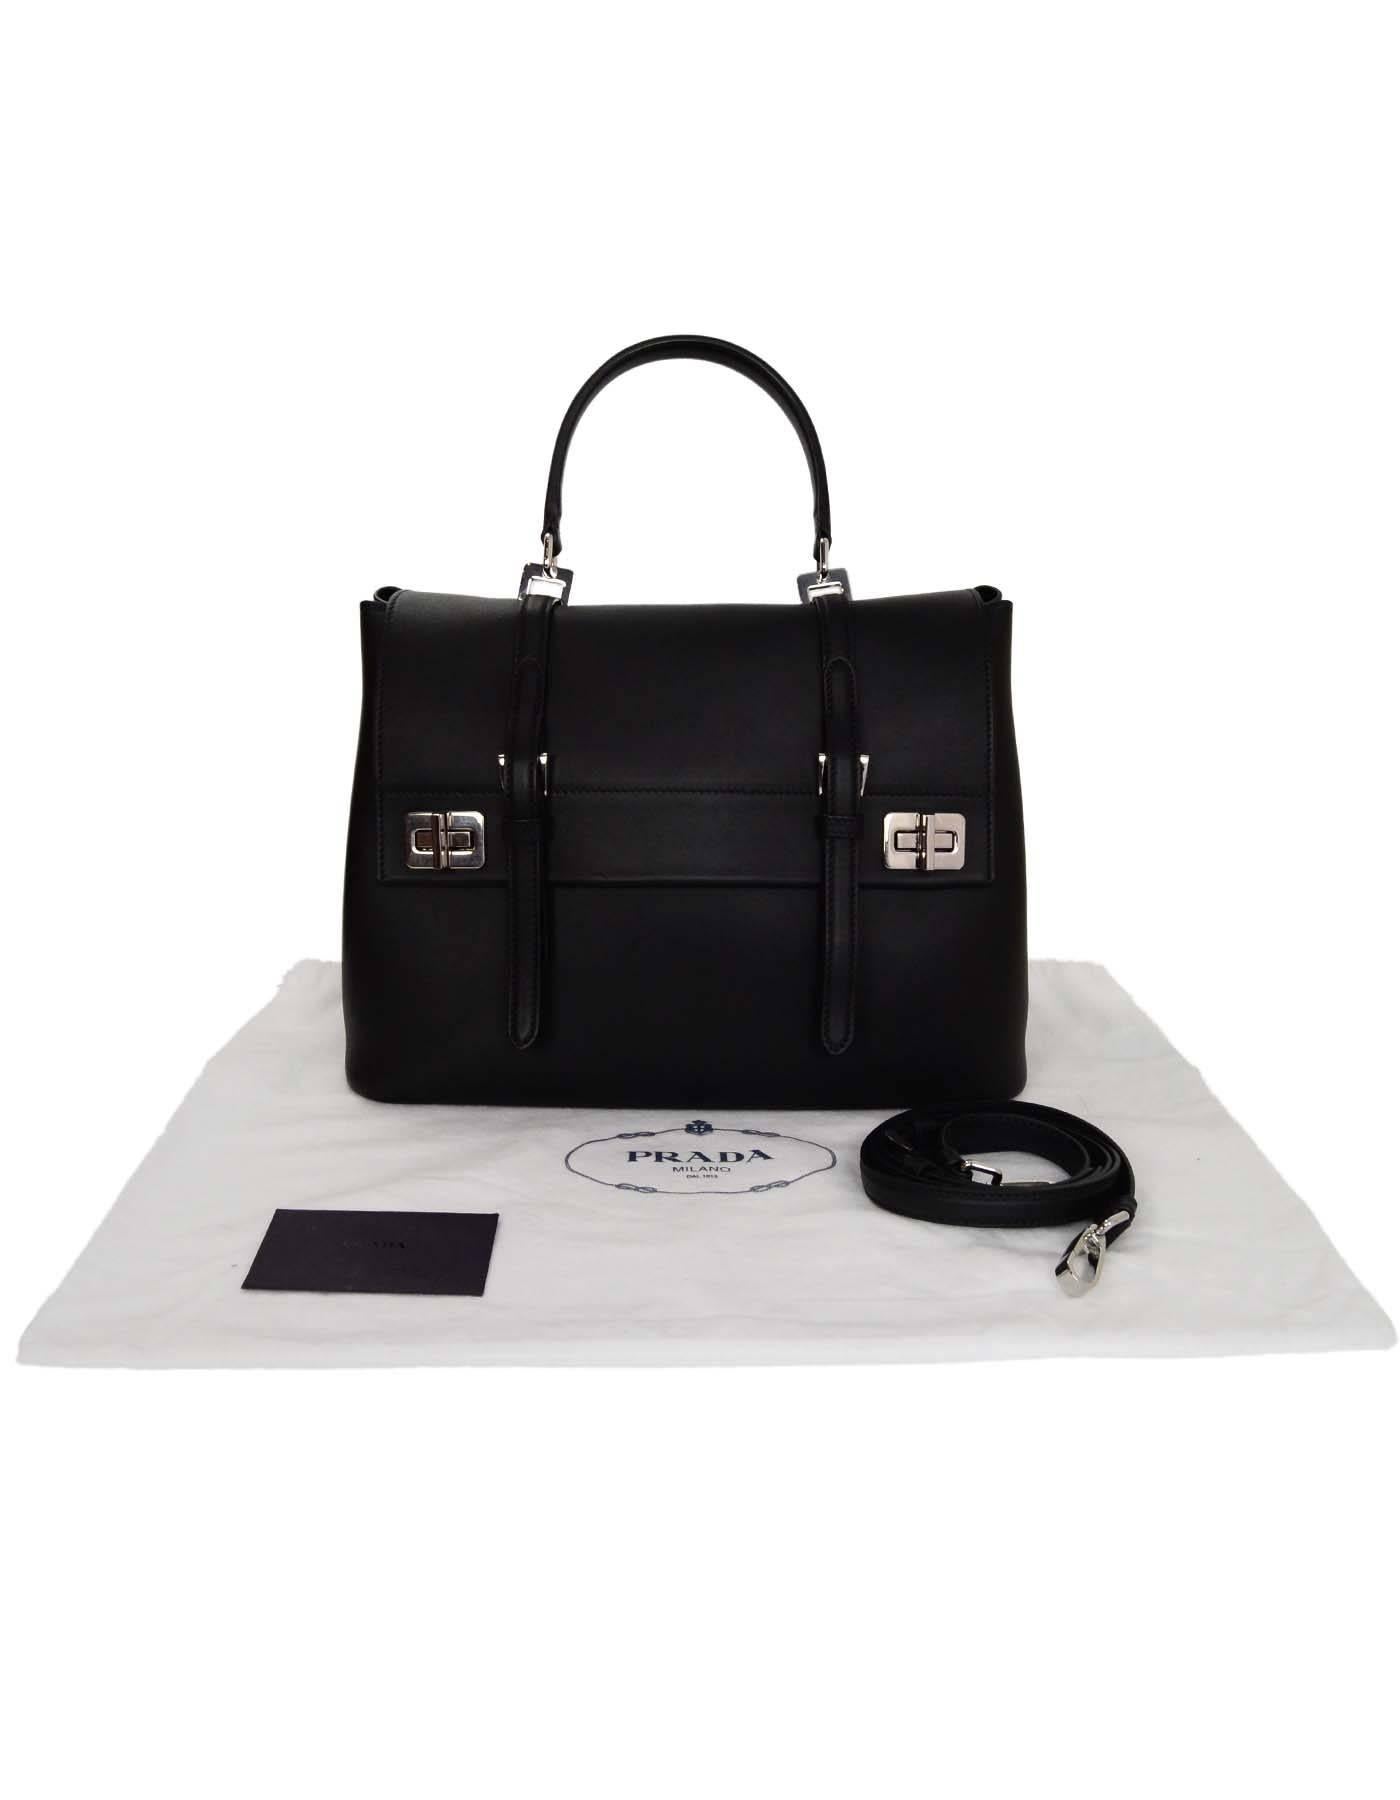 Prada Black Calf Leather Pattina City Satchel Bag w/ Optional Strap  6